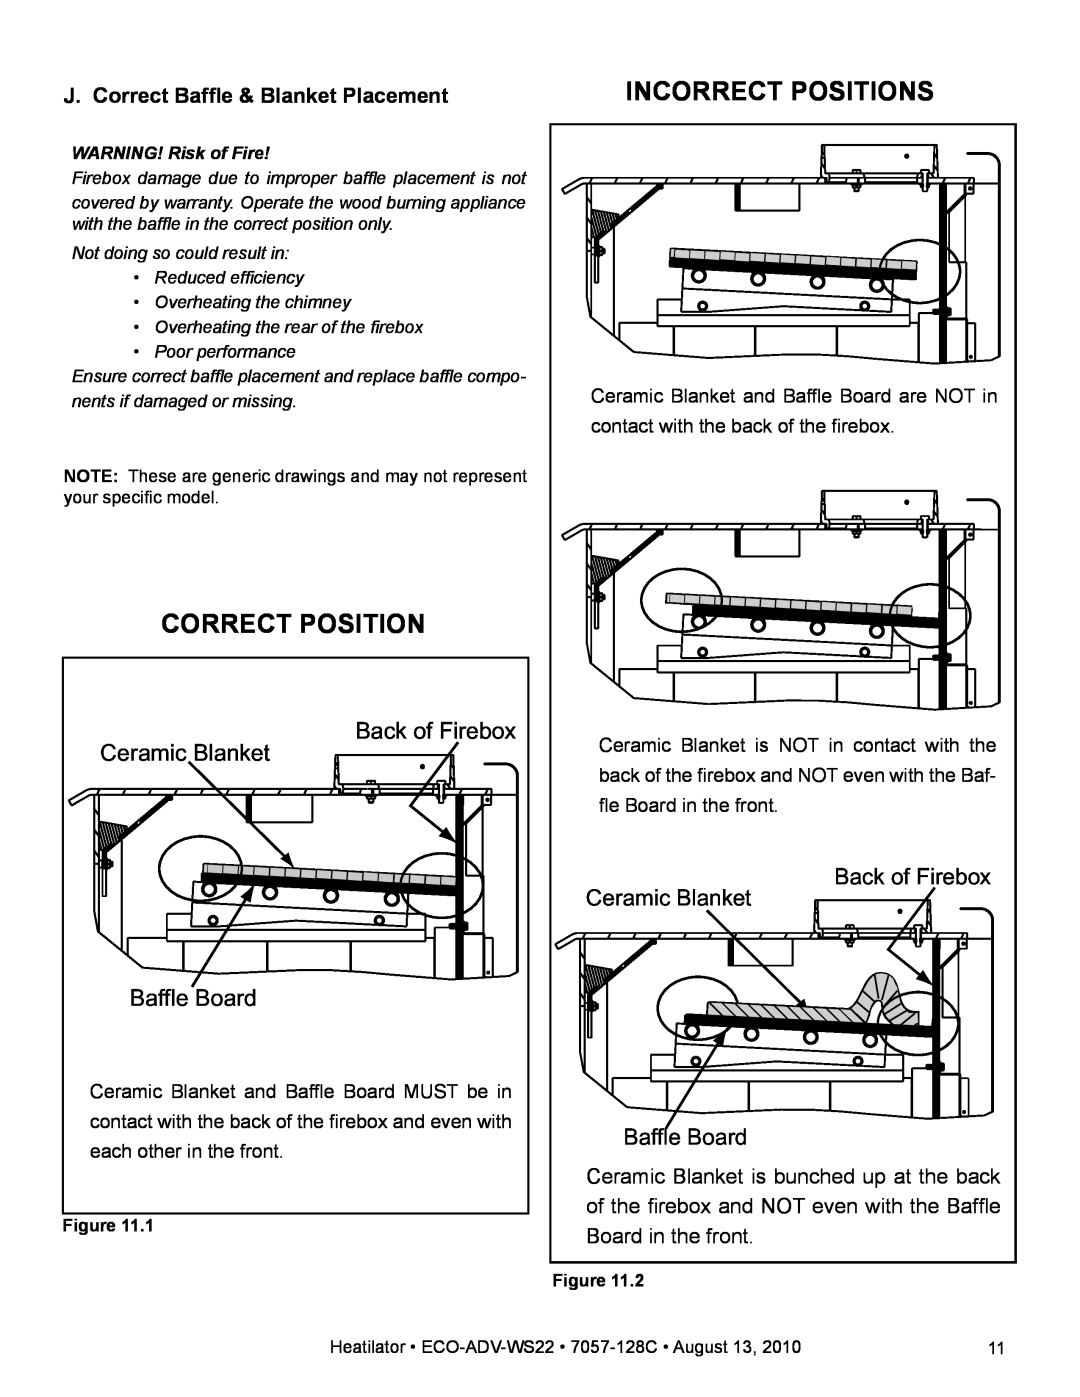 Heatiator ECO-ADV-WS22 warranty Ceramic Blanket, Back of Firebox, Baffle Board, J. Correct Baffle & Blanket Placement 